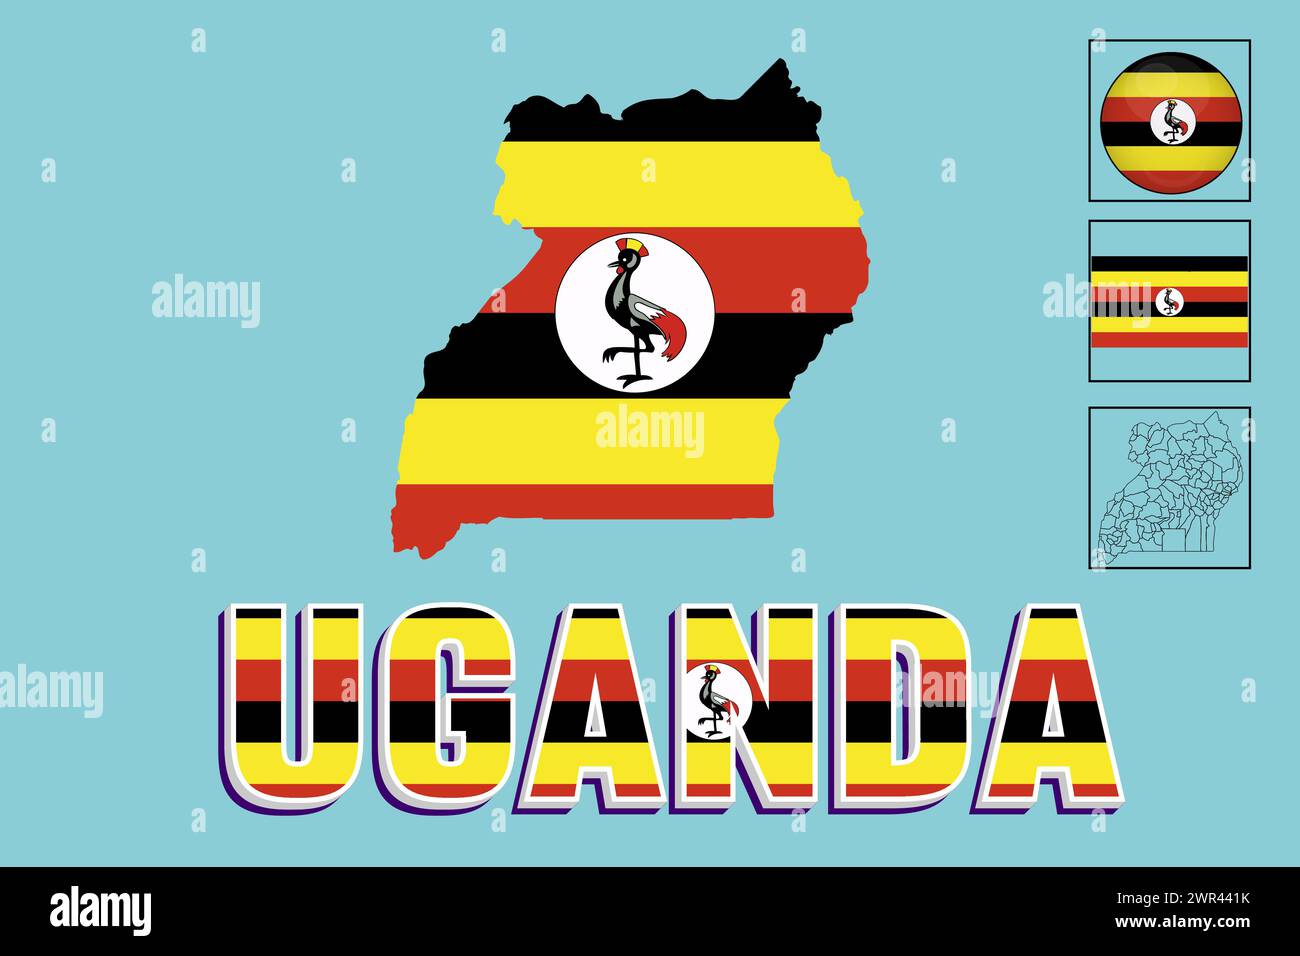 Uganda flag and map in vector illustration Stock Vector